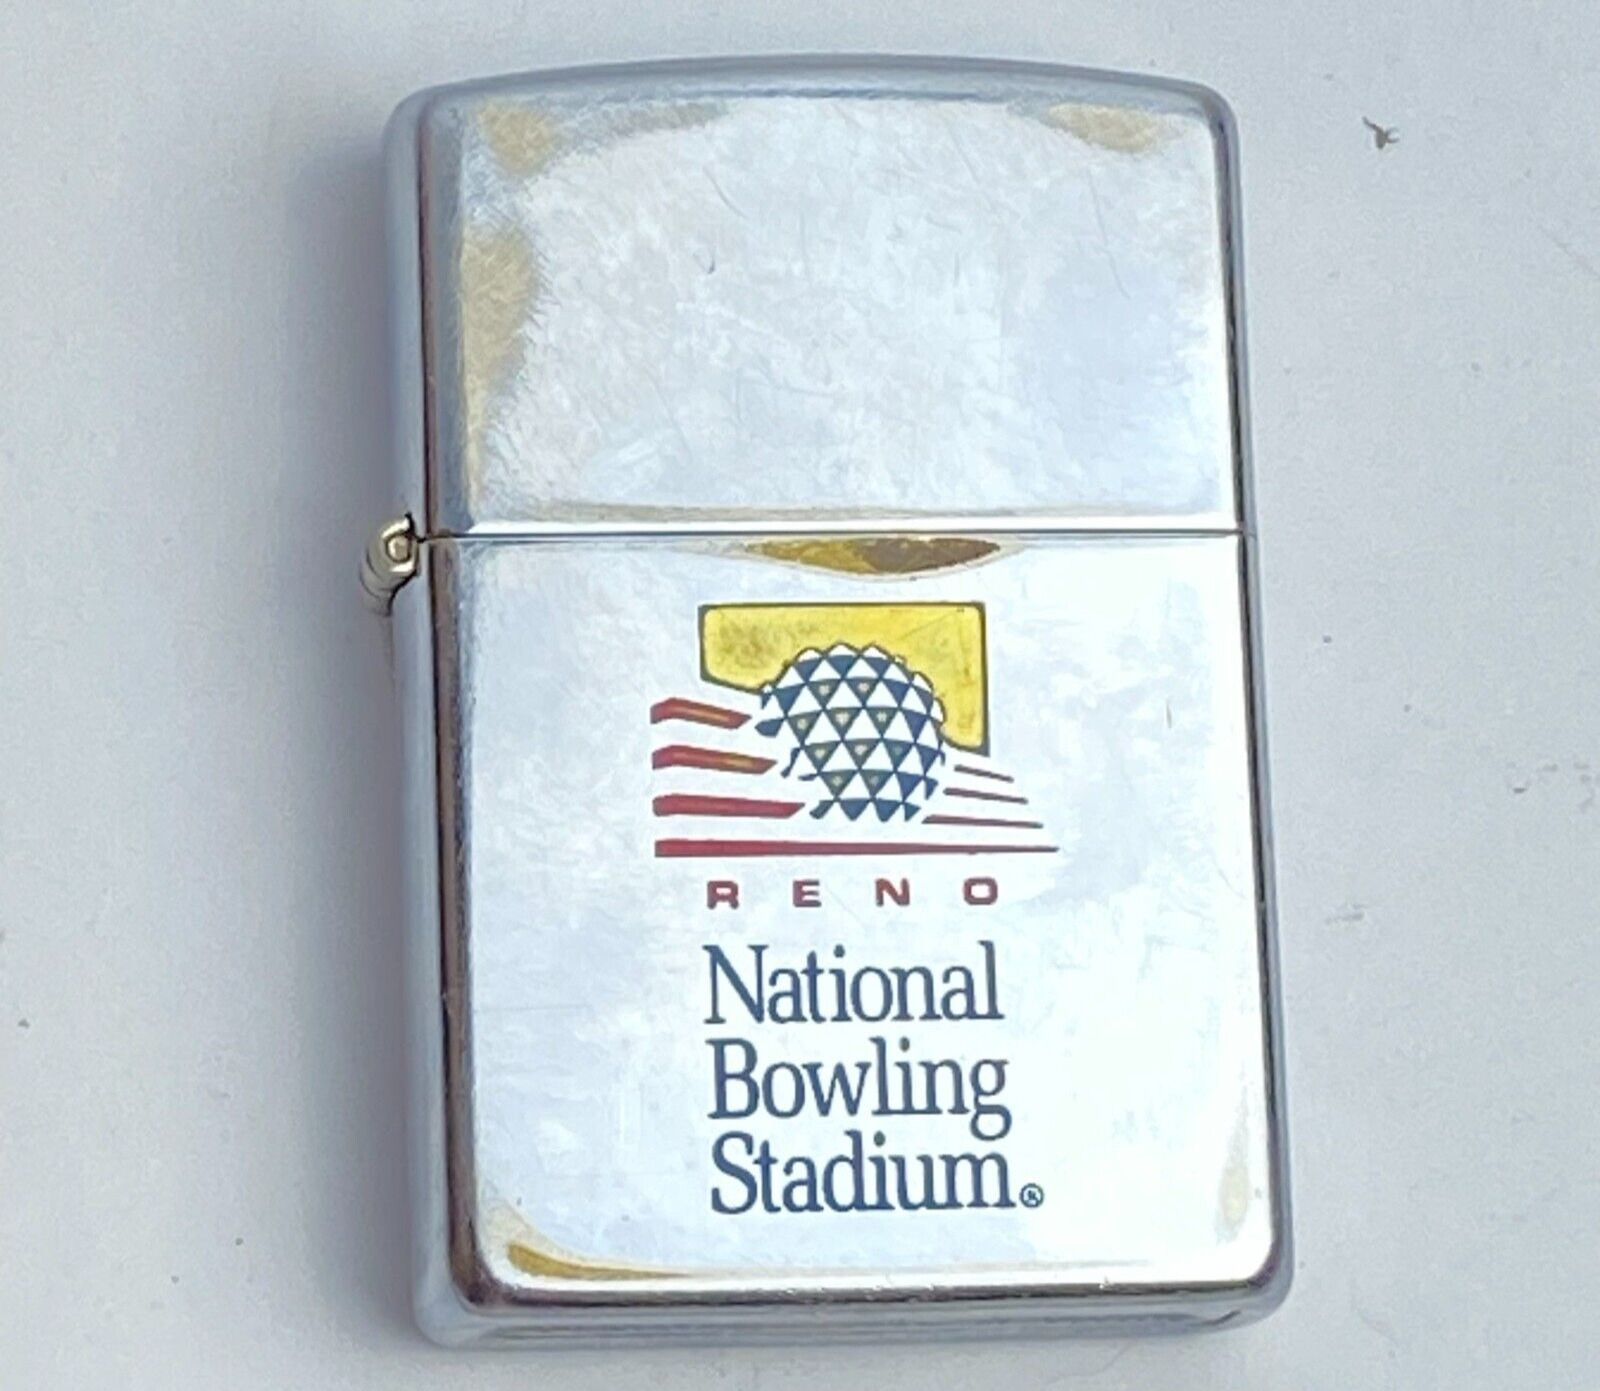 1995 Vintage Zippo Lighter Advertising Reno National Bowling Stadium